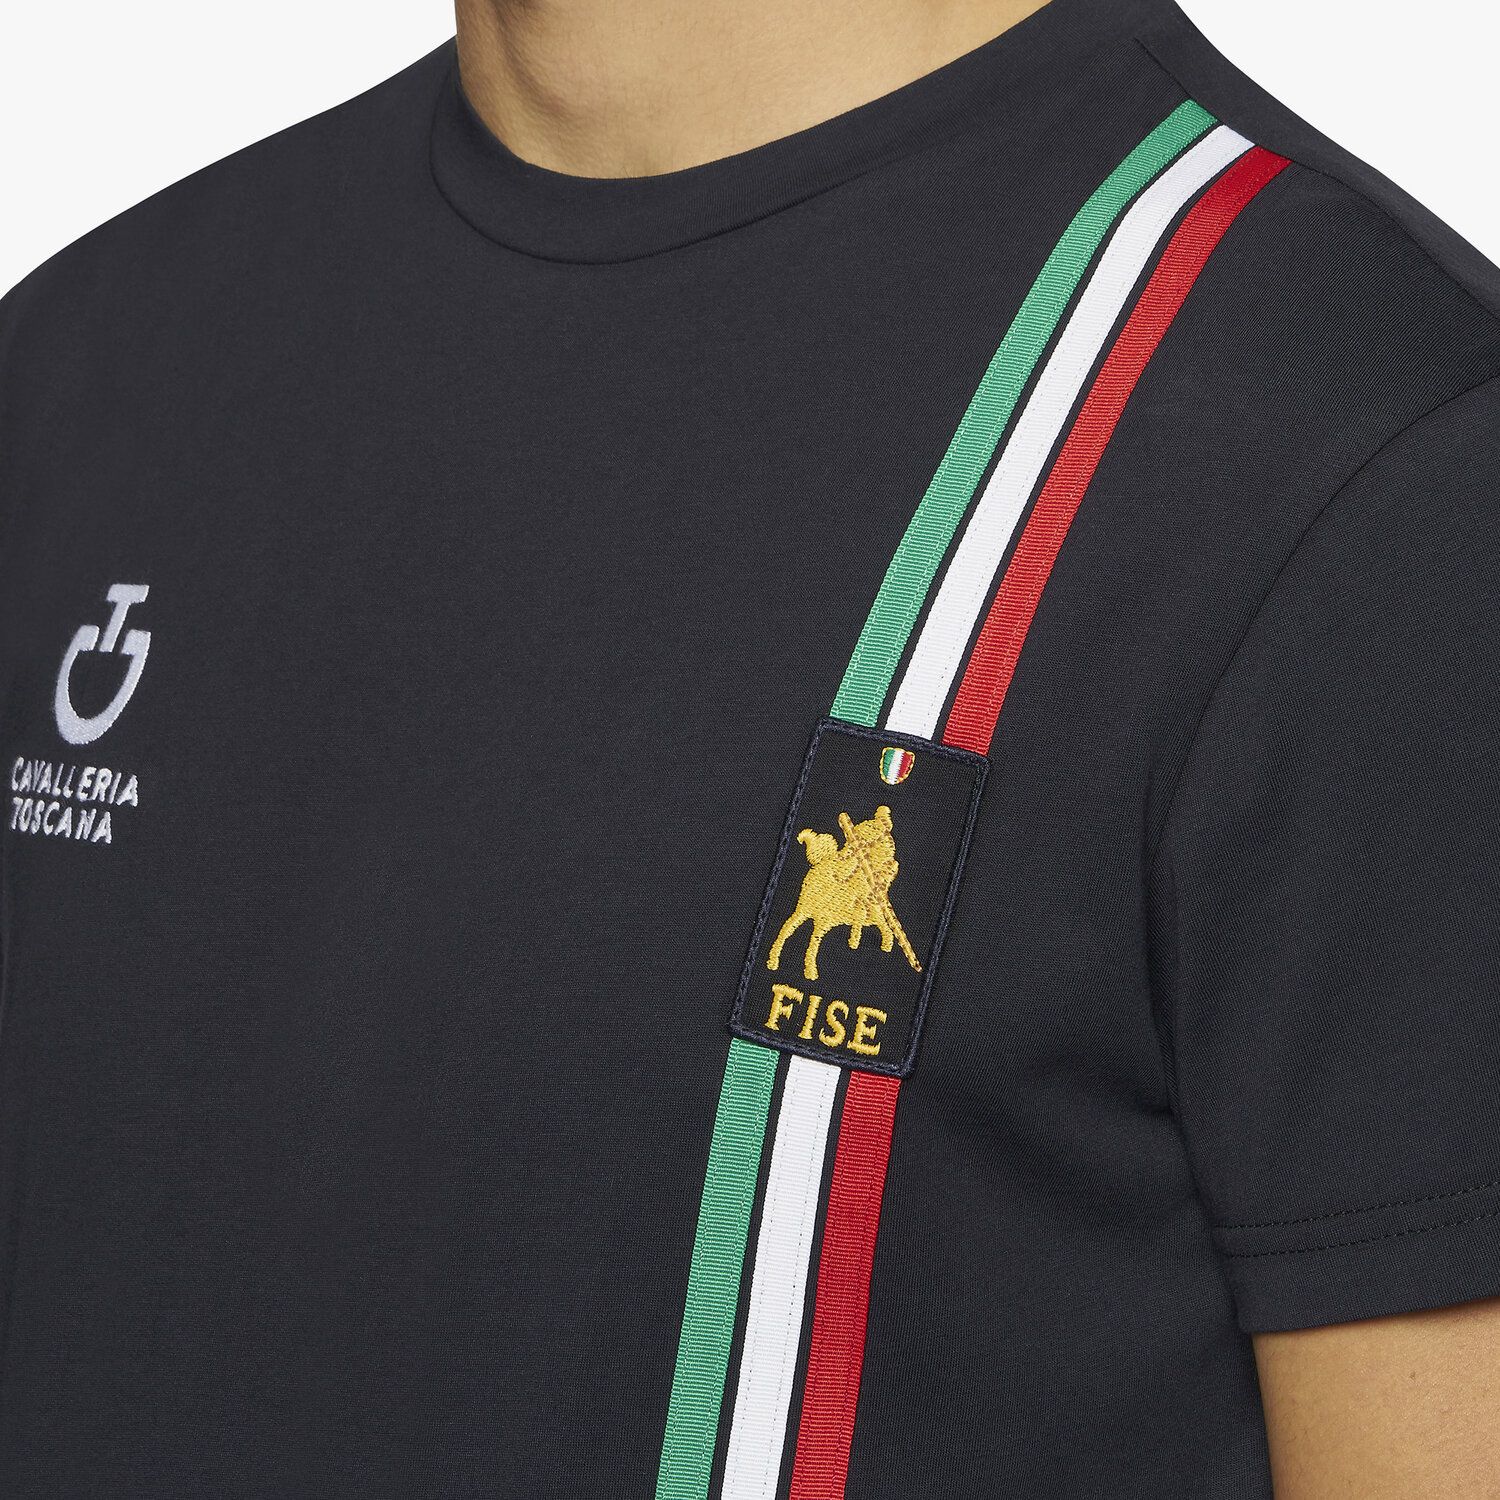 Cavalleria Toscana Man's FISE short sleeved t-shirt NAVY-6